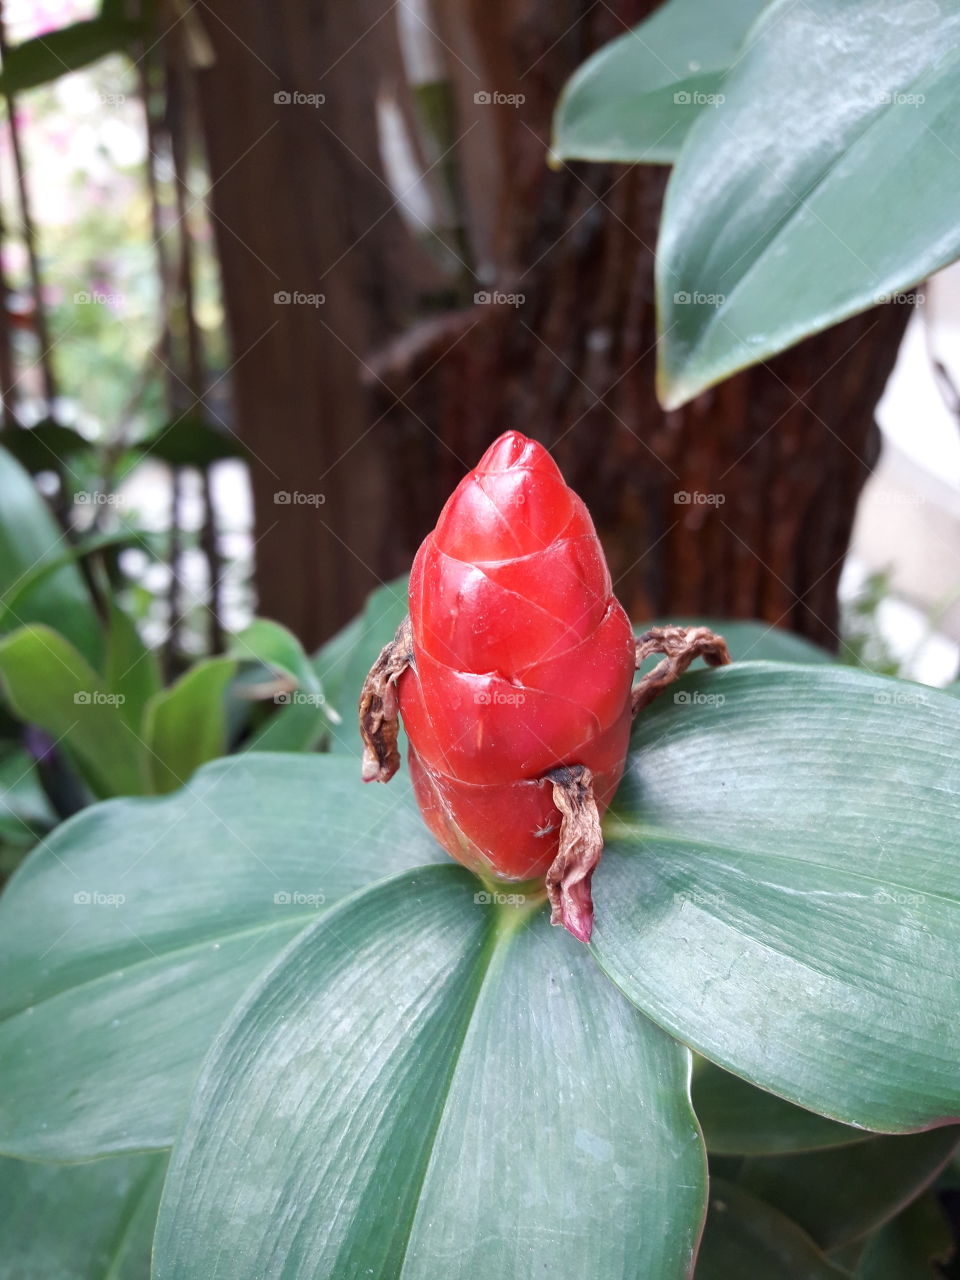 the smaller red flower bud